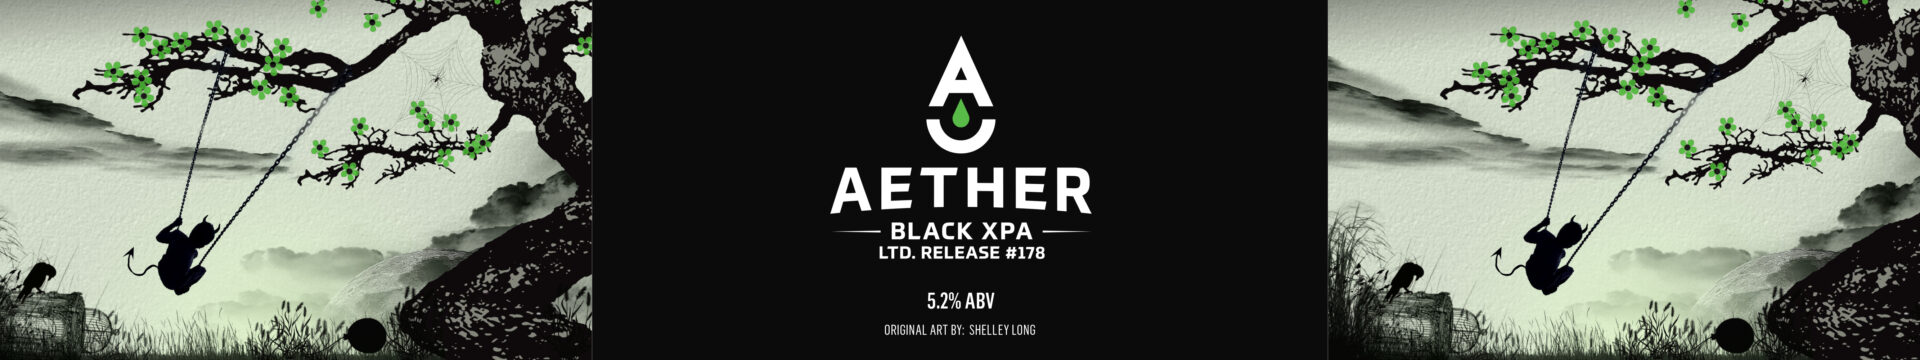 Aether Black XPA Web Banner